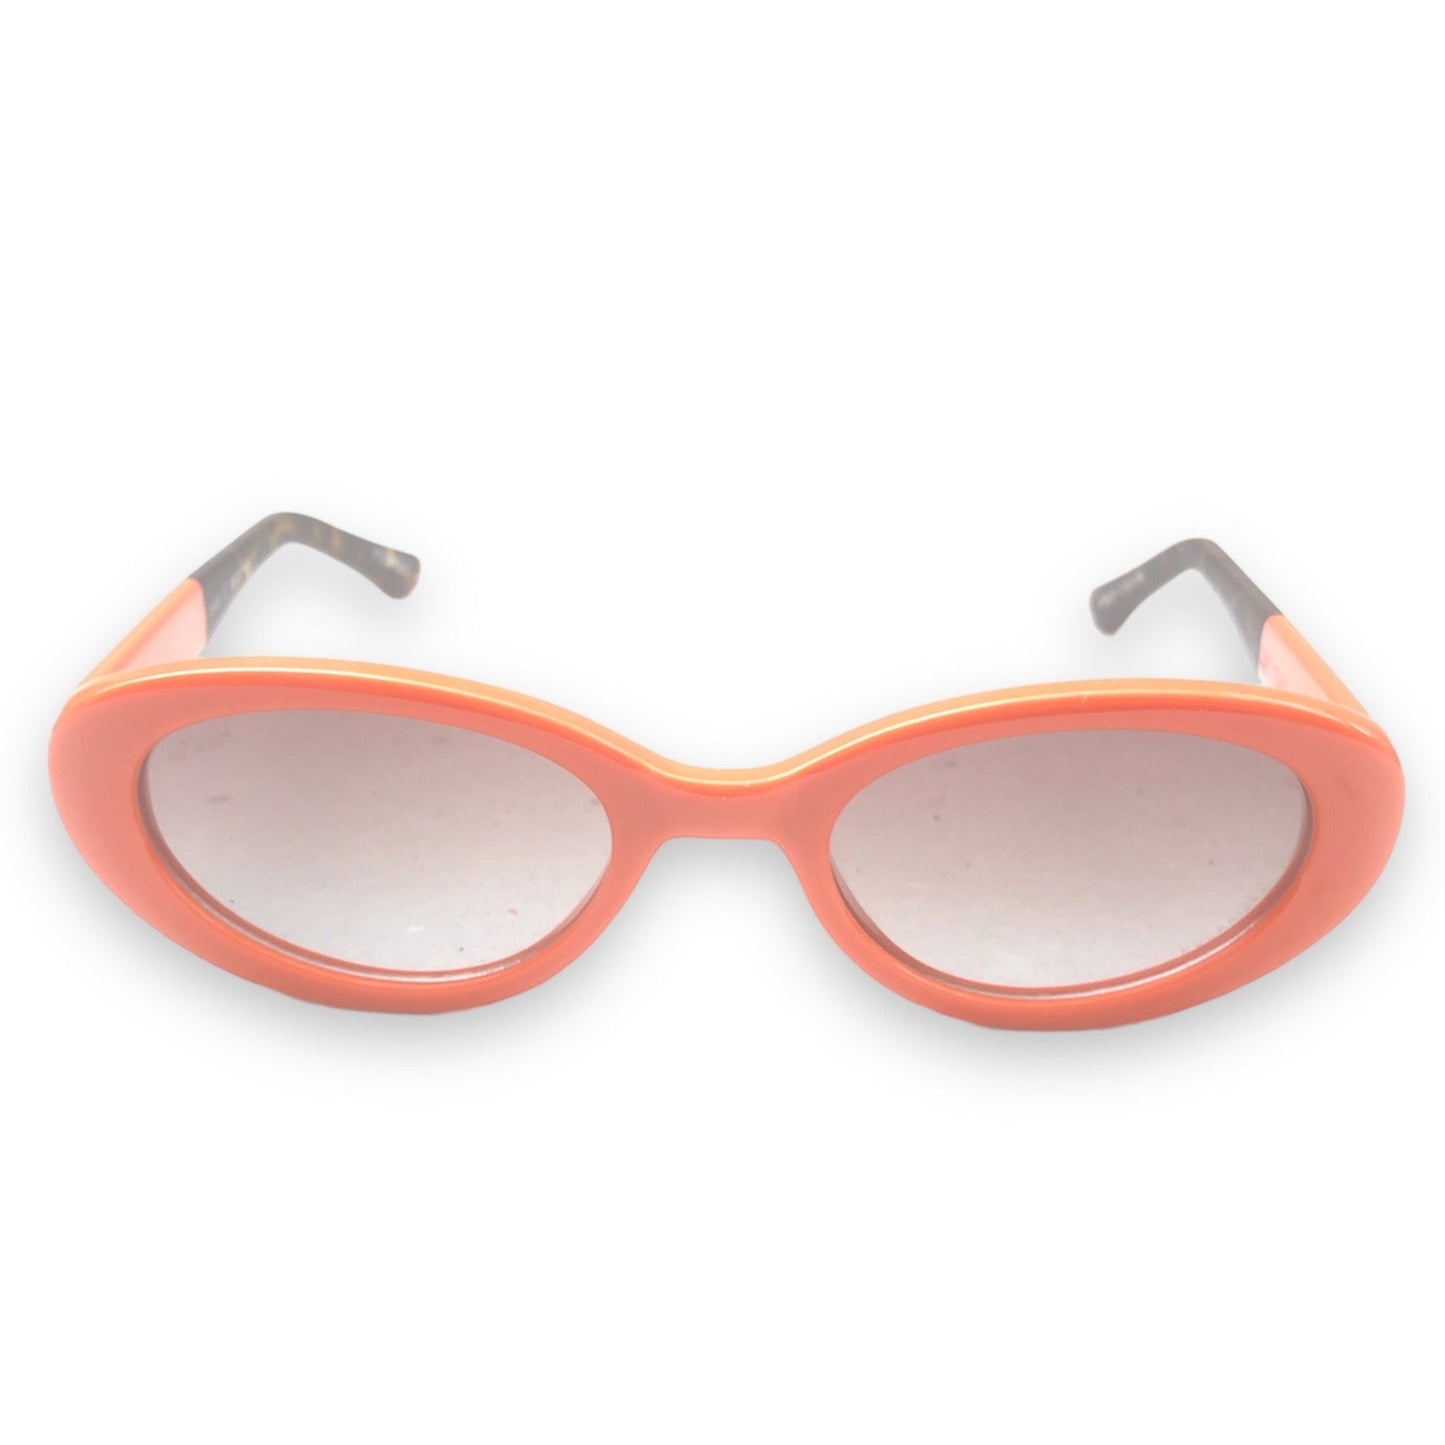 Ronda sunglasses made from plant-based plastic